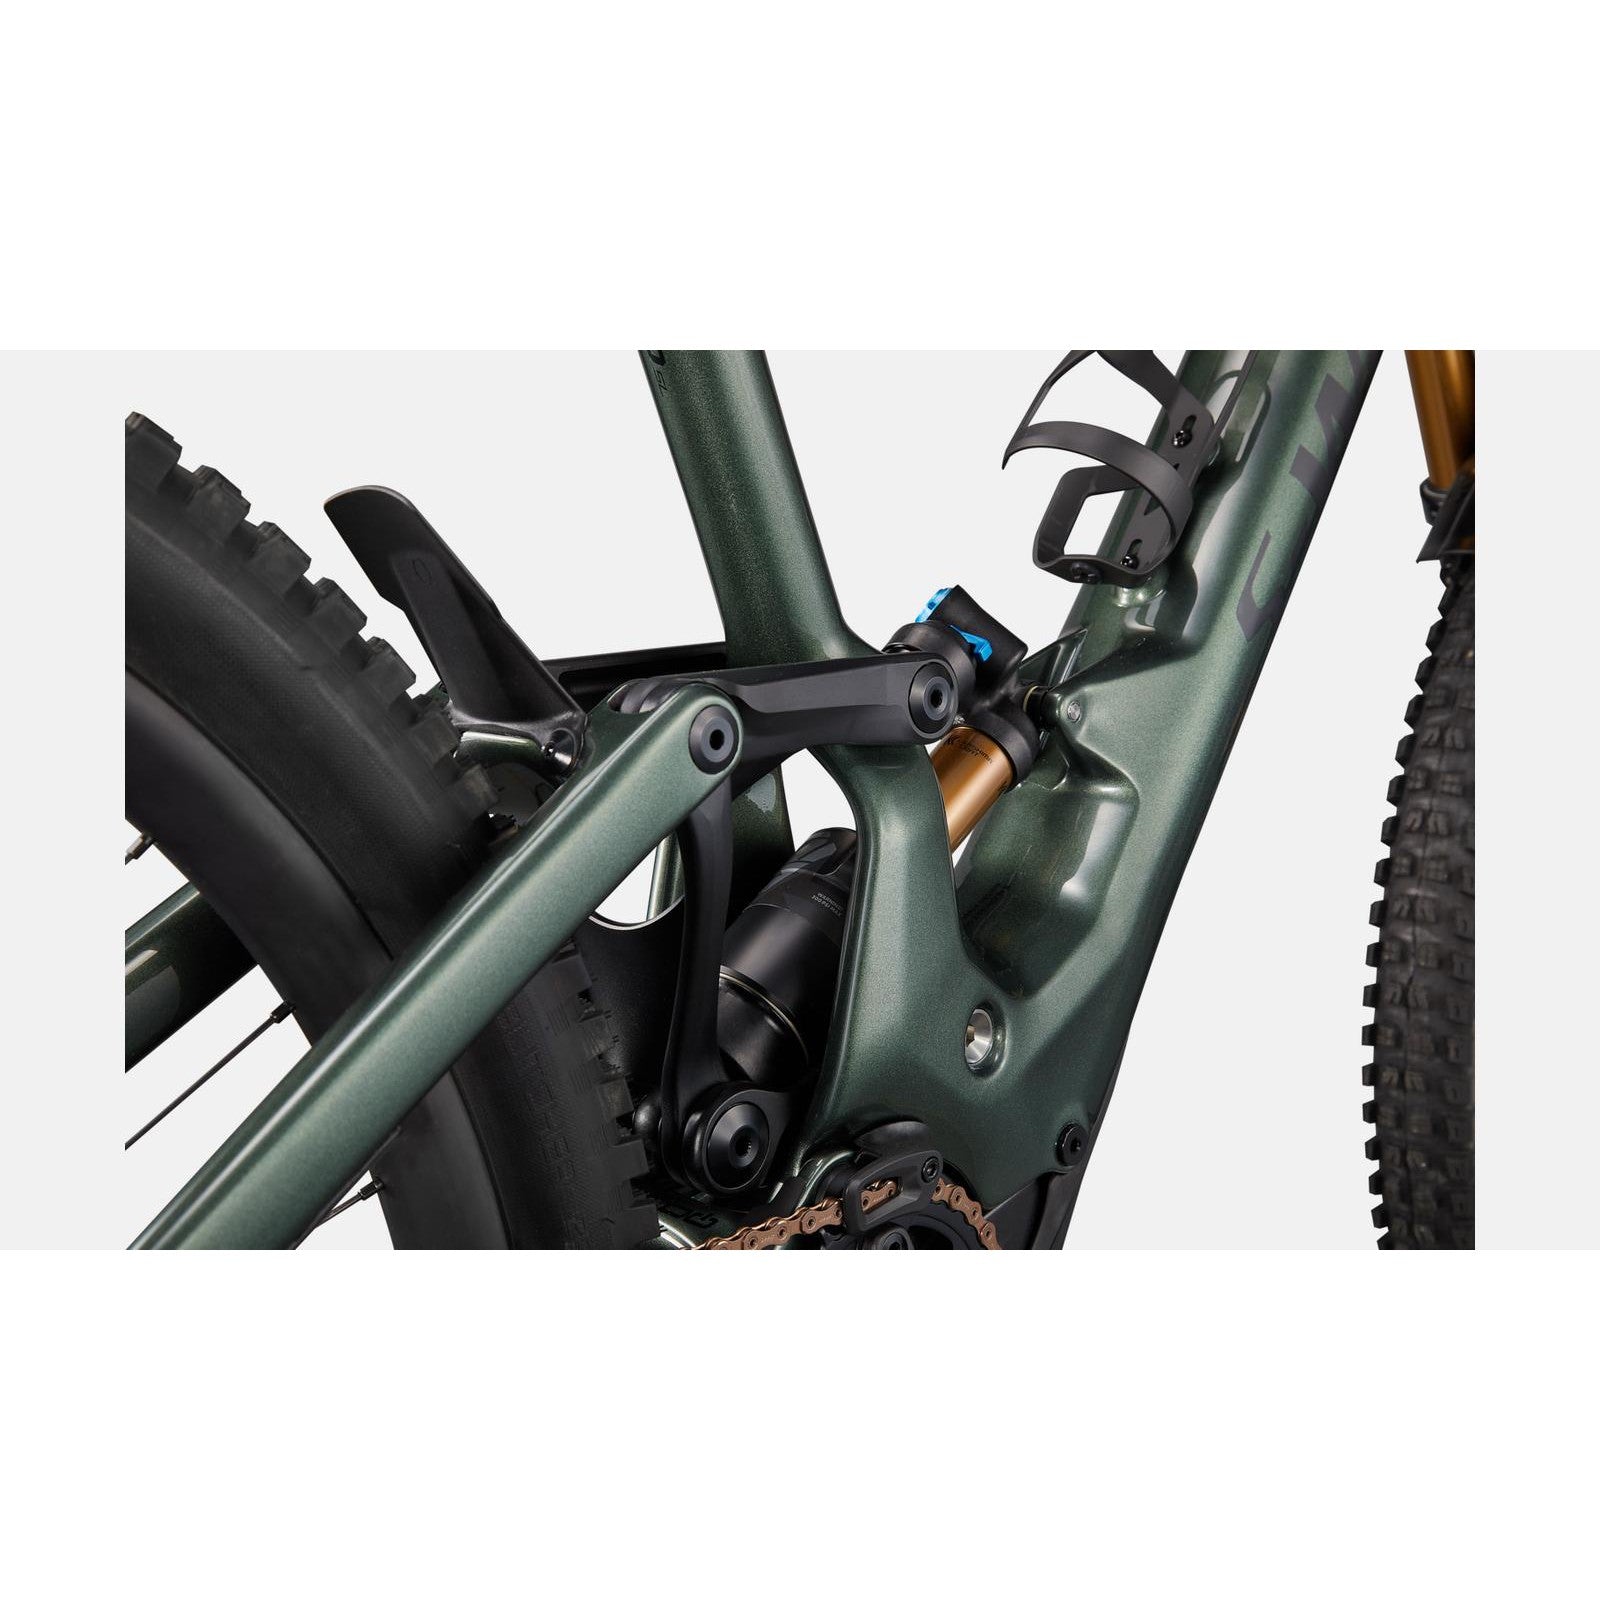 Specialized Kenevo SL S-Works Carbon 29" Electric Mountain Bike - Bikes - Bicycle Warehouse